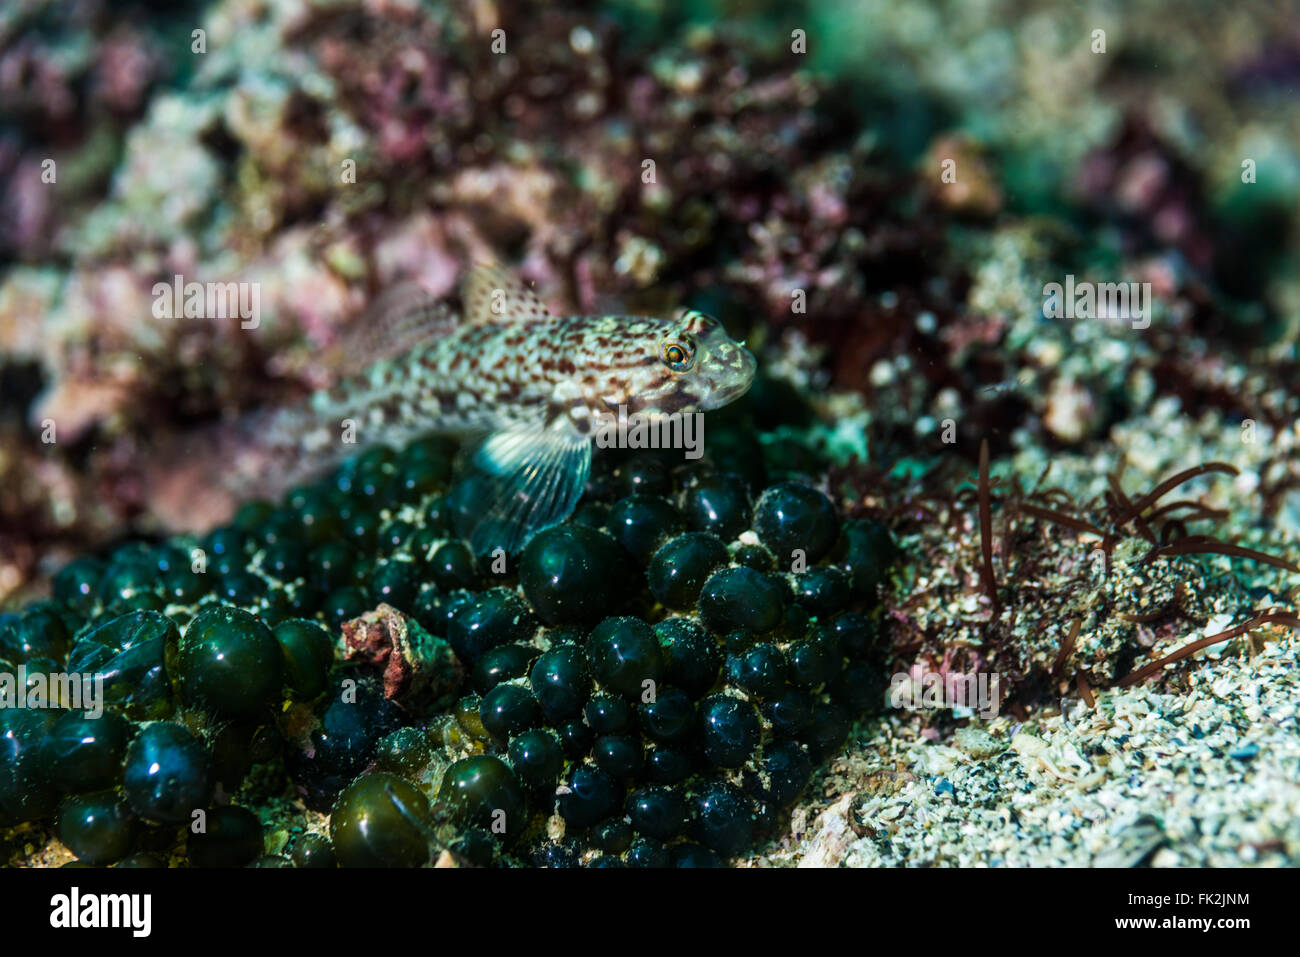 Melasma pygmy goby, Eviota melasma, on the valonia. Depthe 3m Stock Photo